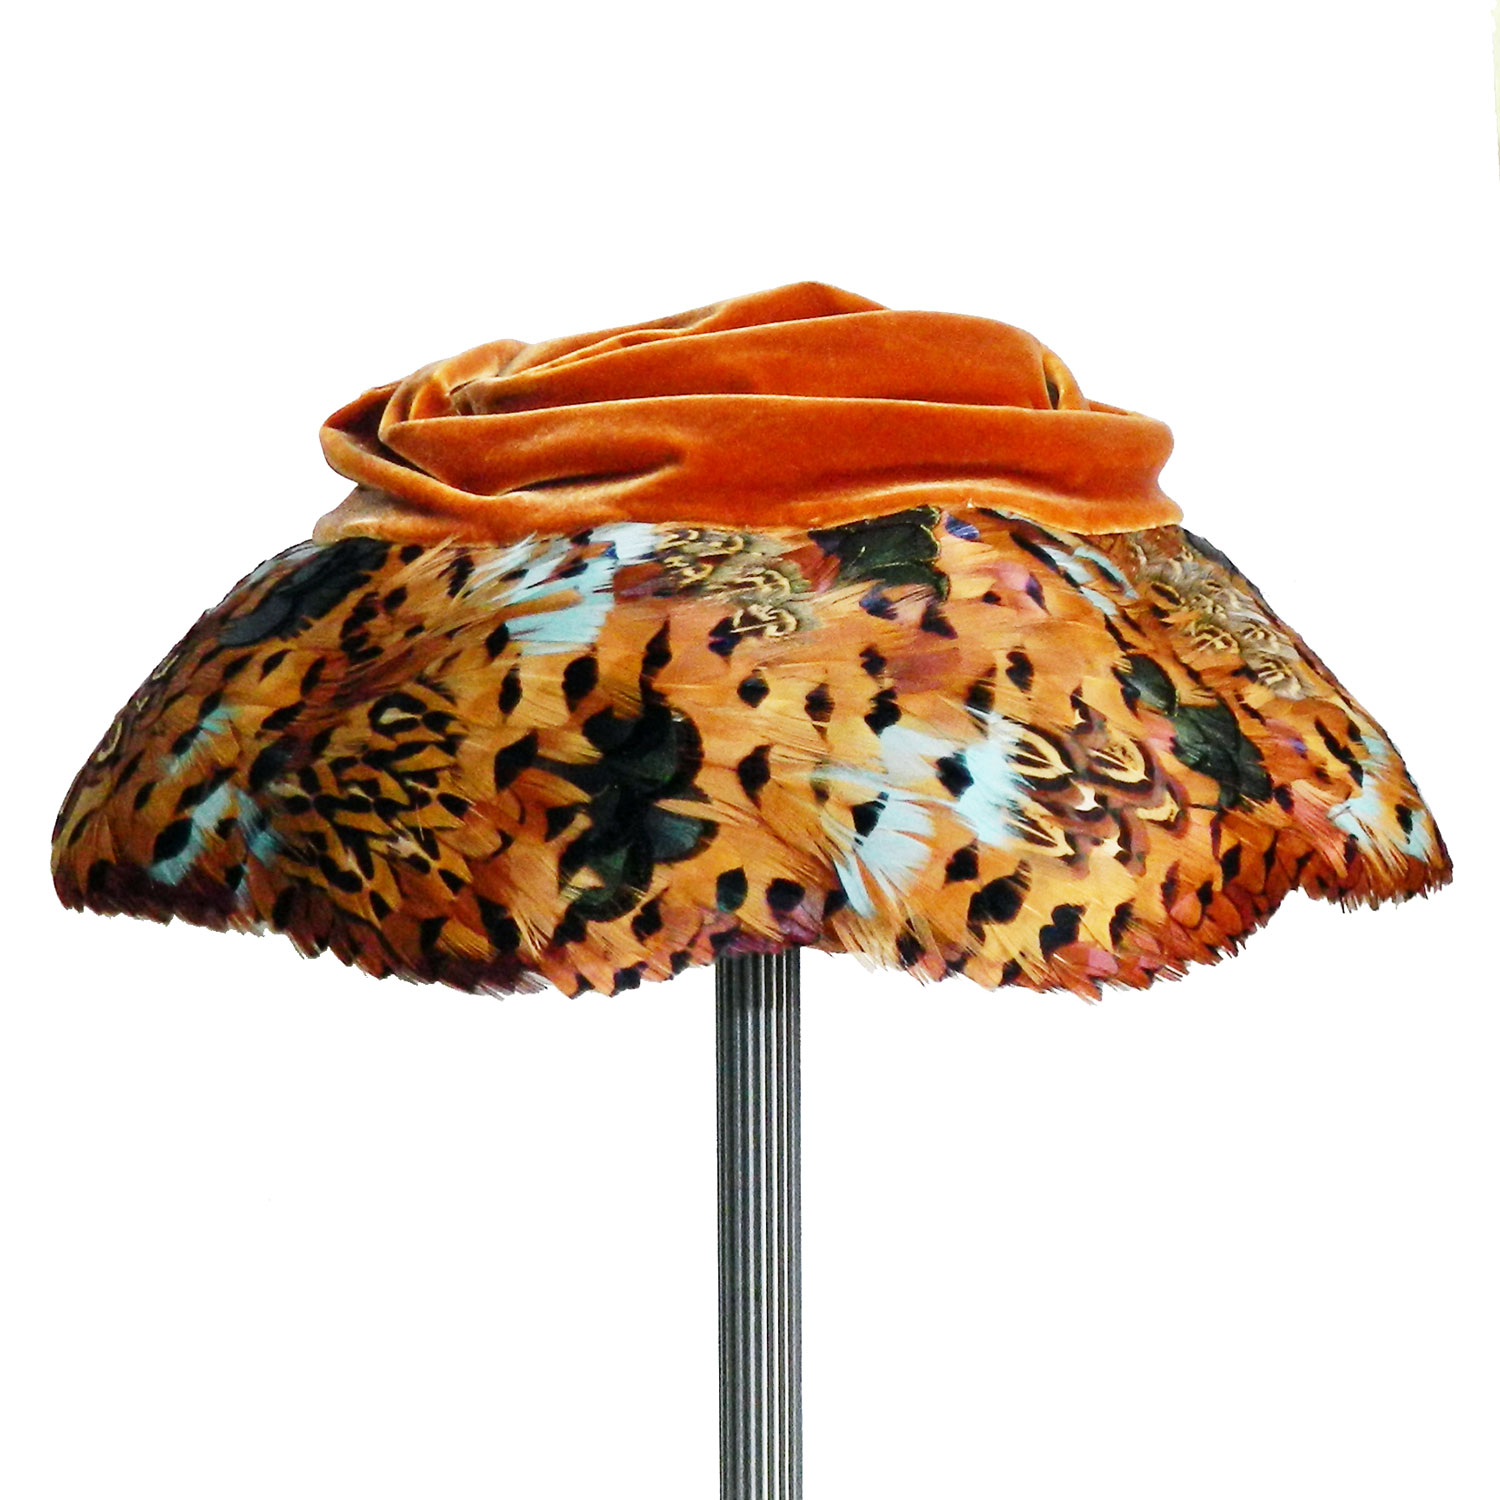 Orange feather hat